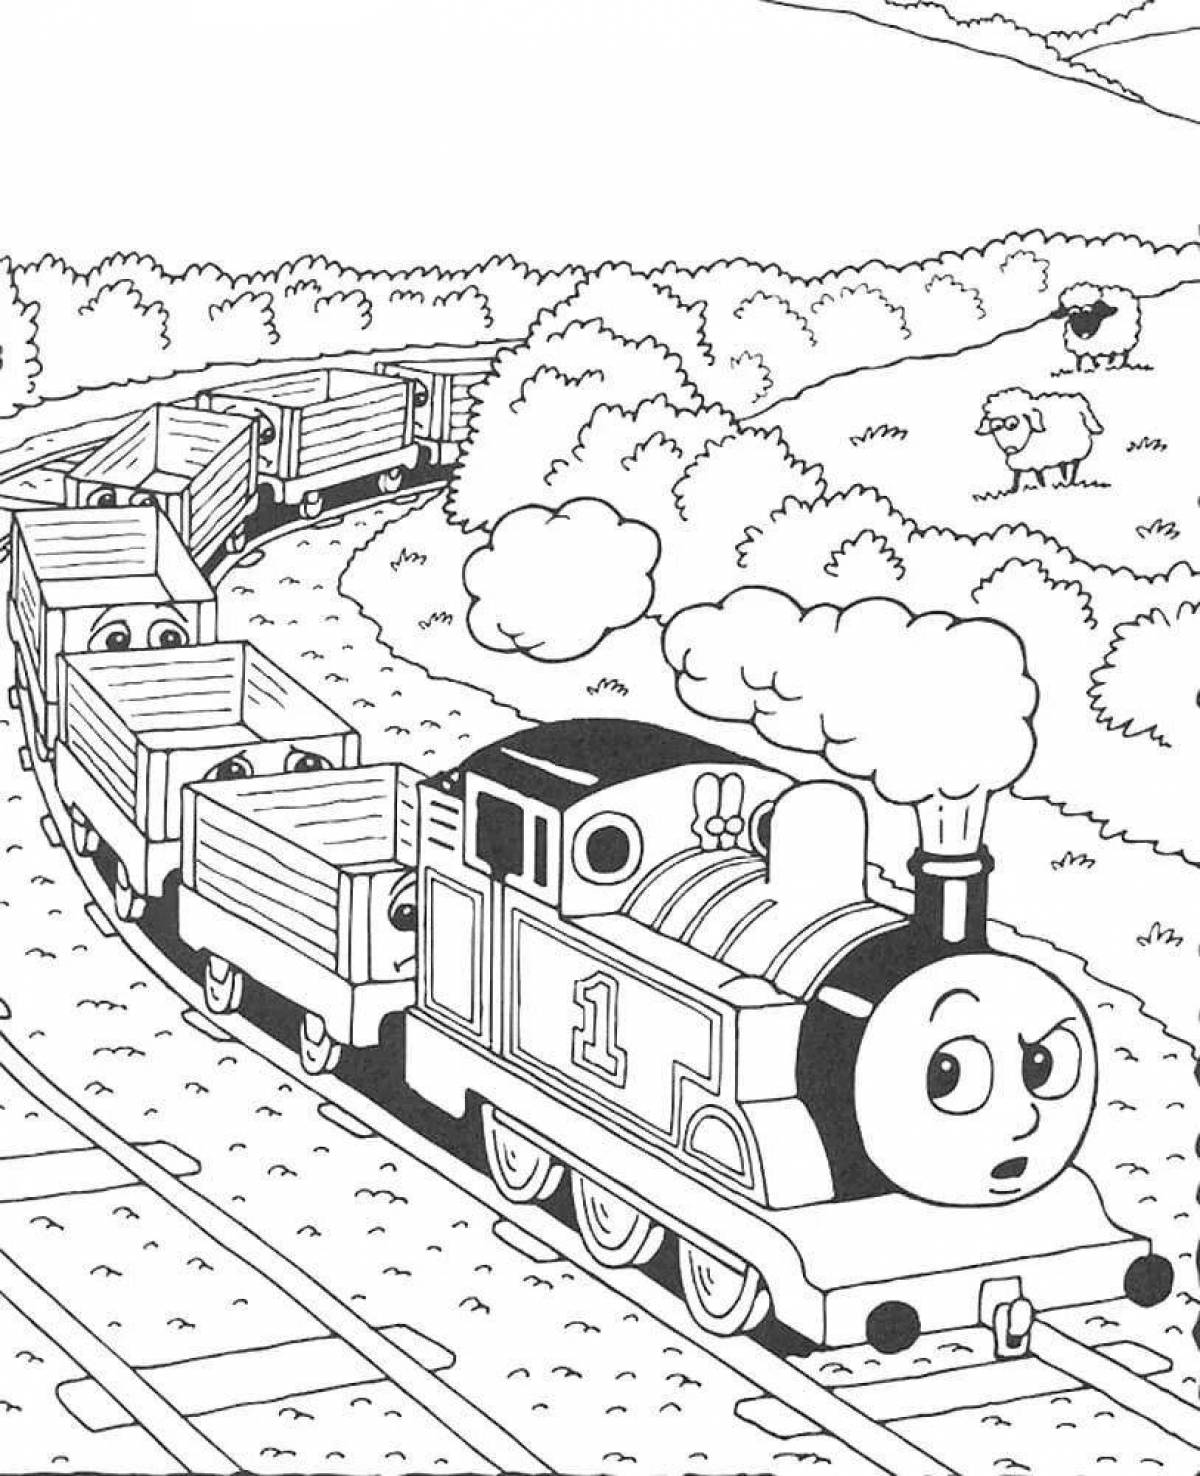 Thomas the Wonderful Tank Engine coloring book